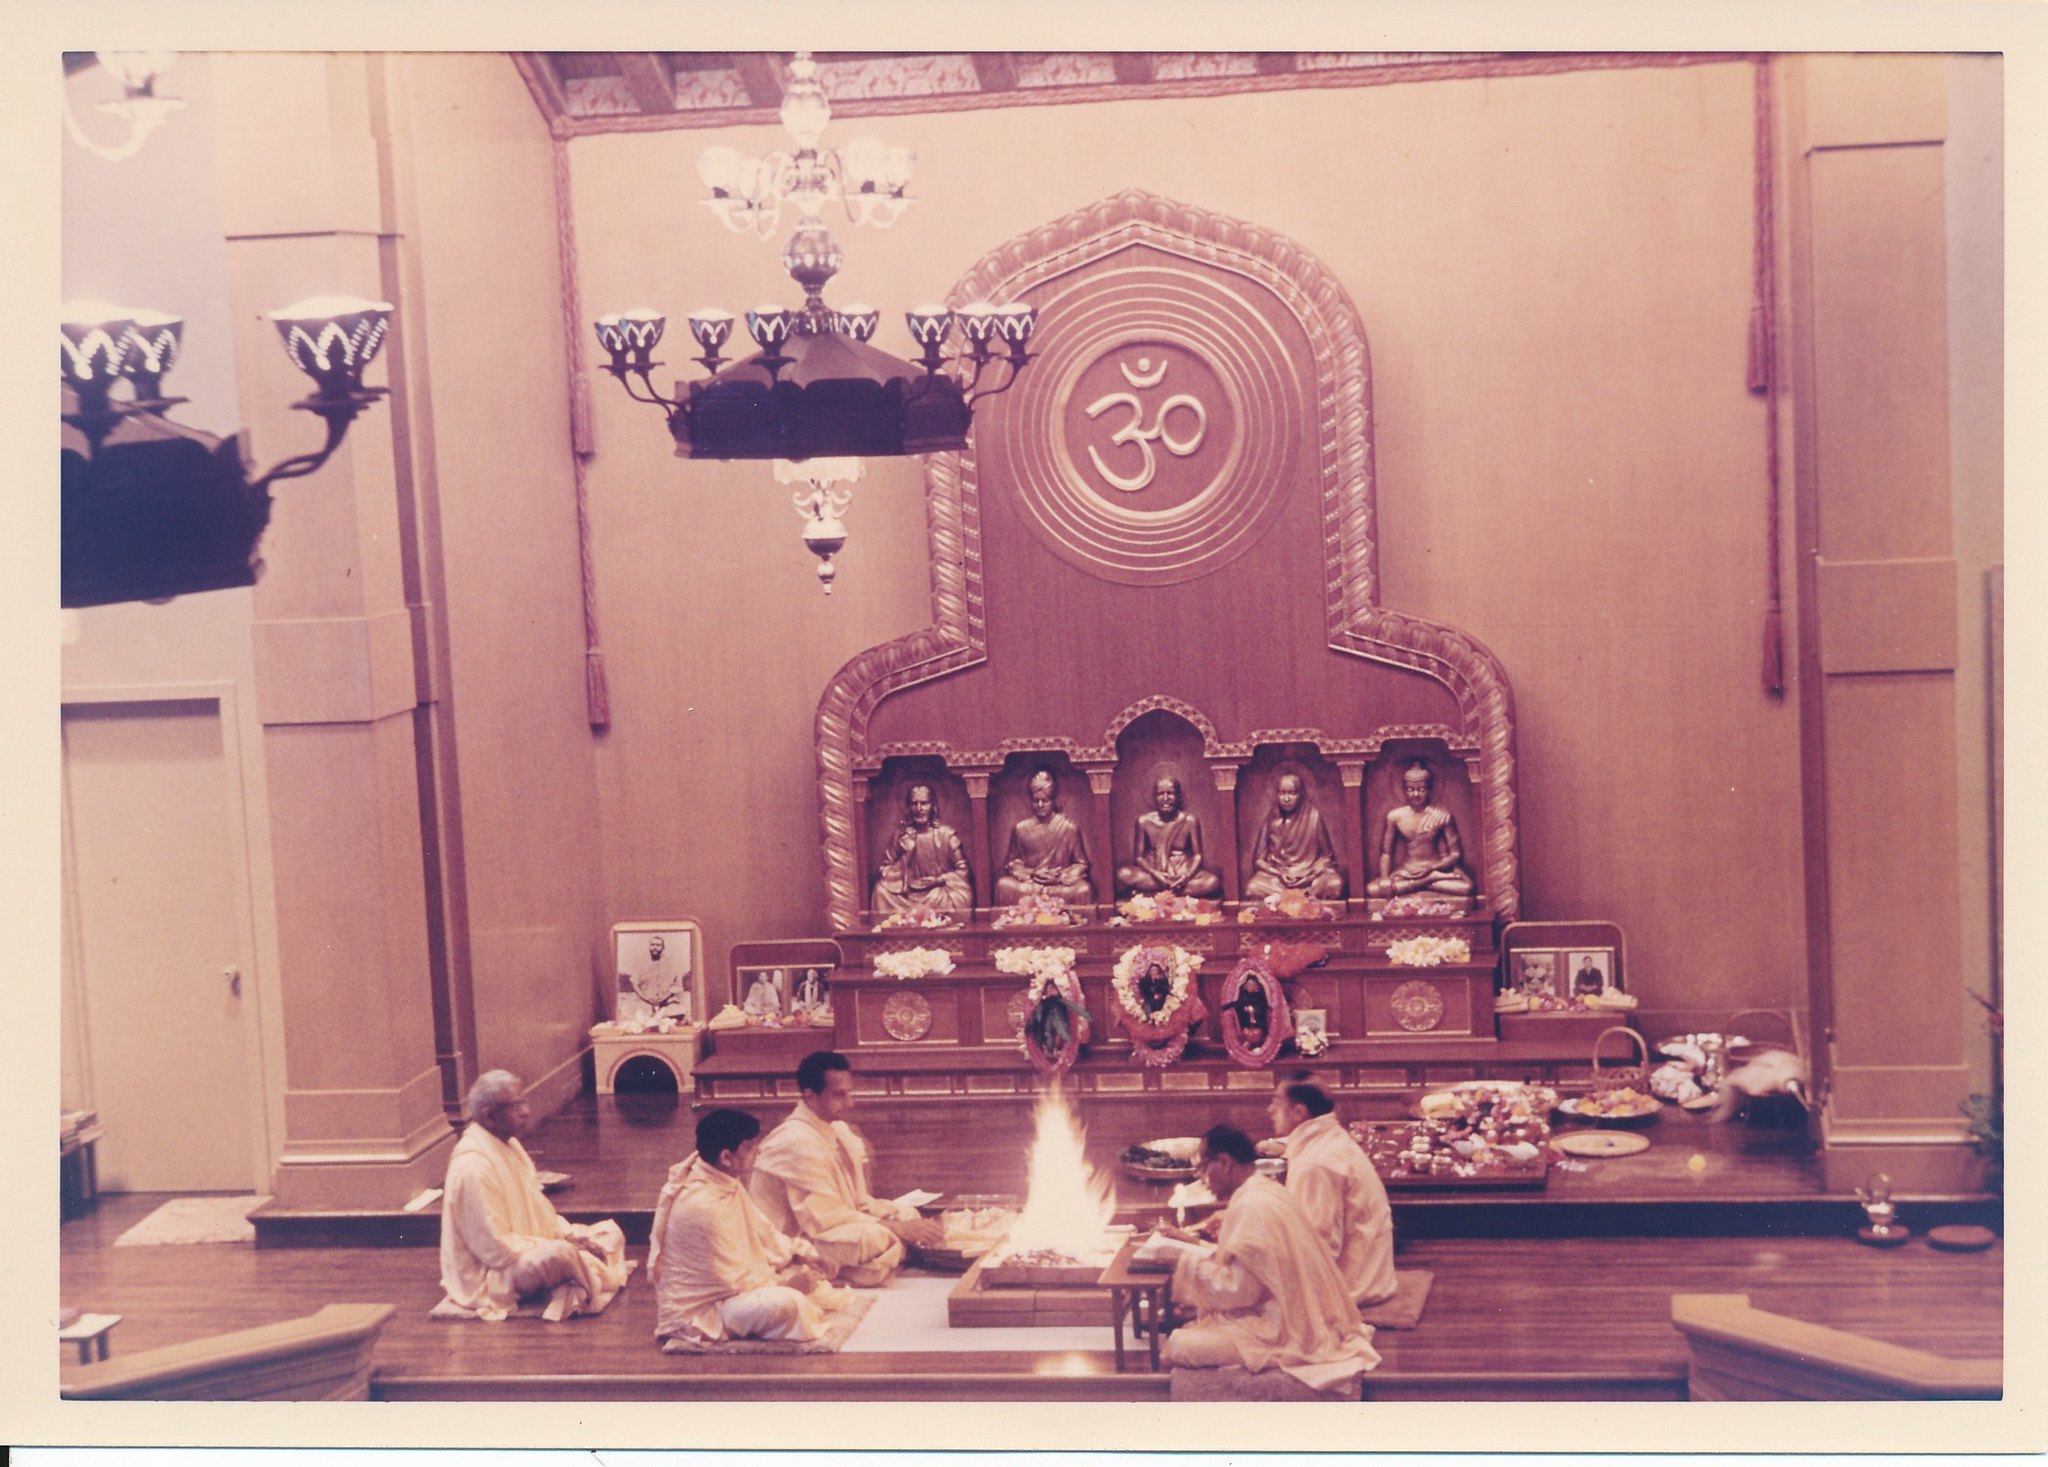 SF Swami Ashokananda Swami Aseshananda Vandana Swami Shraddhananda Swami Shantaswarupananda S Fnew Temple 2